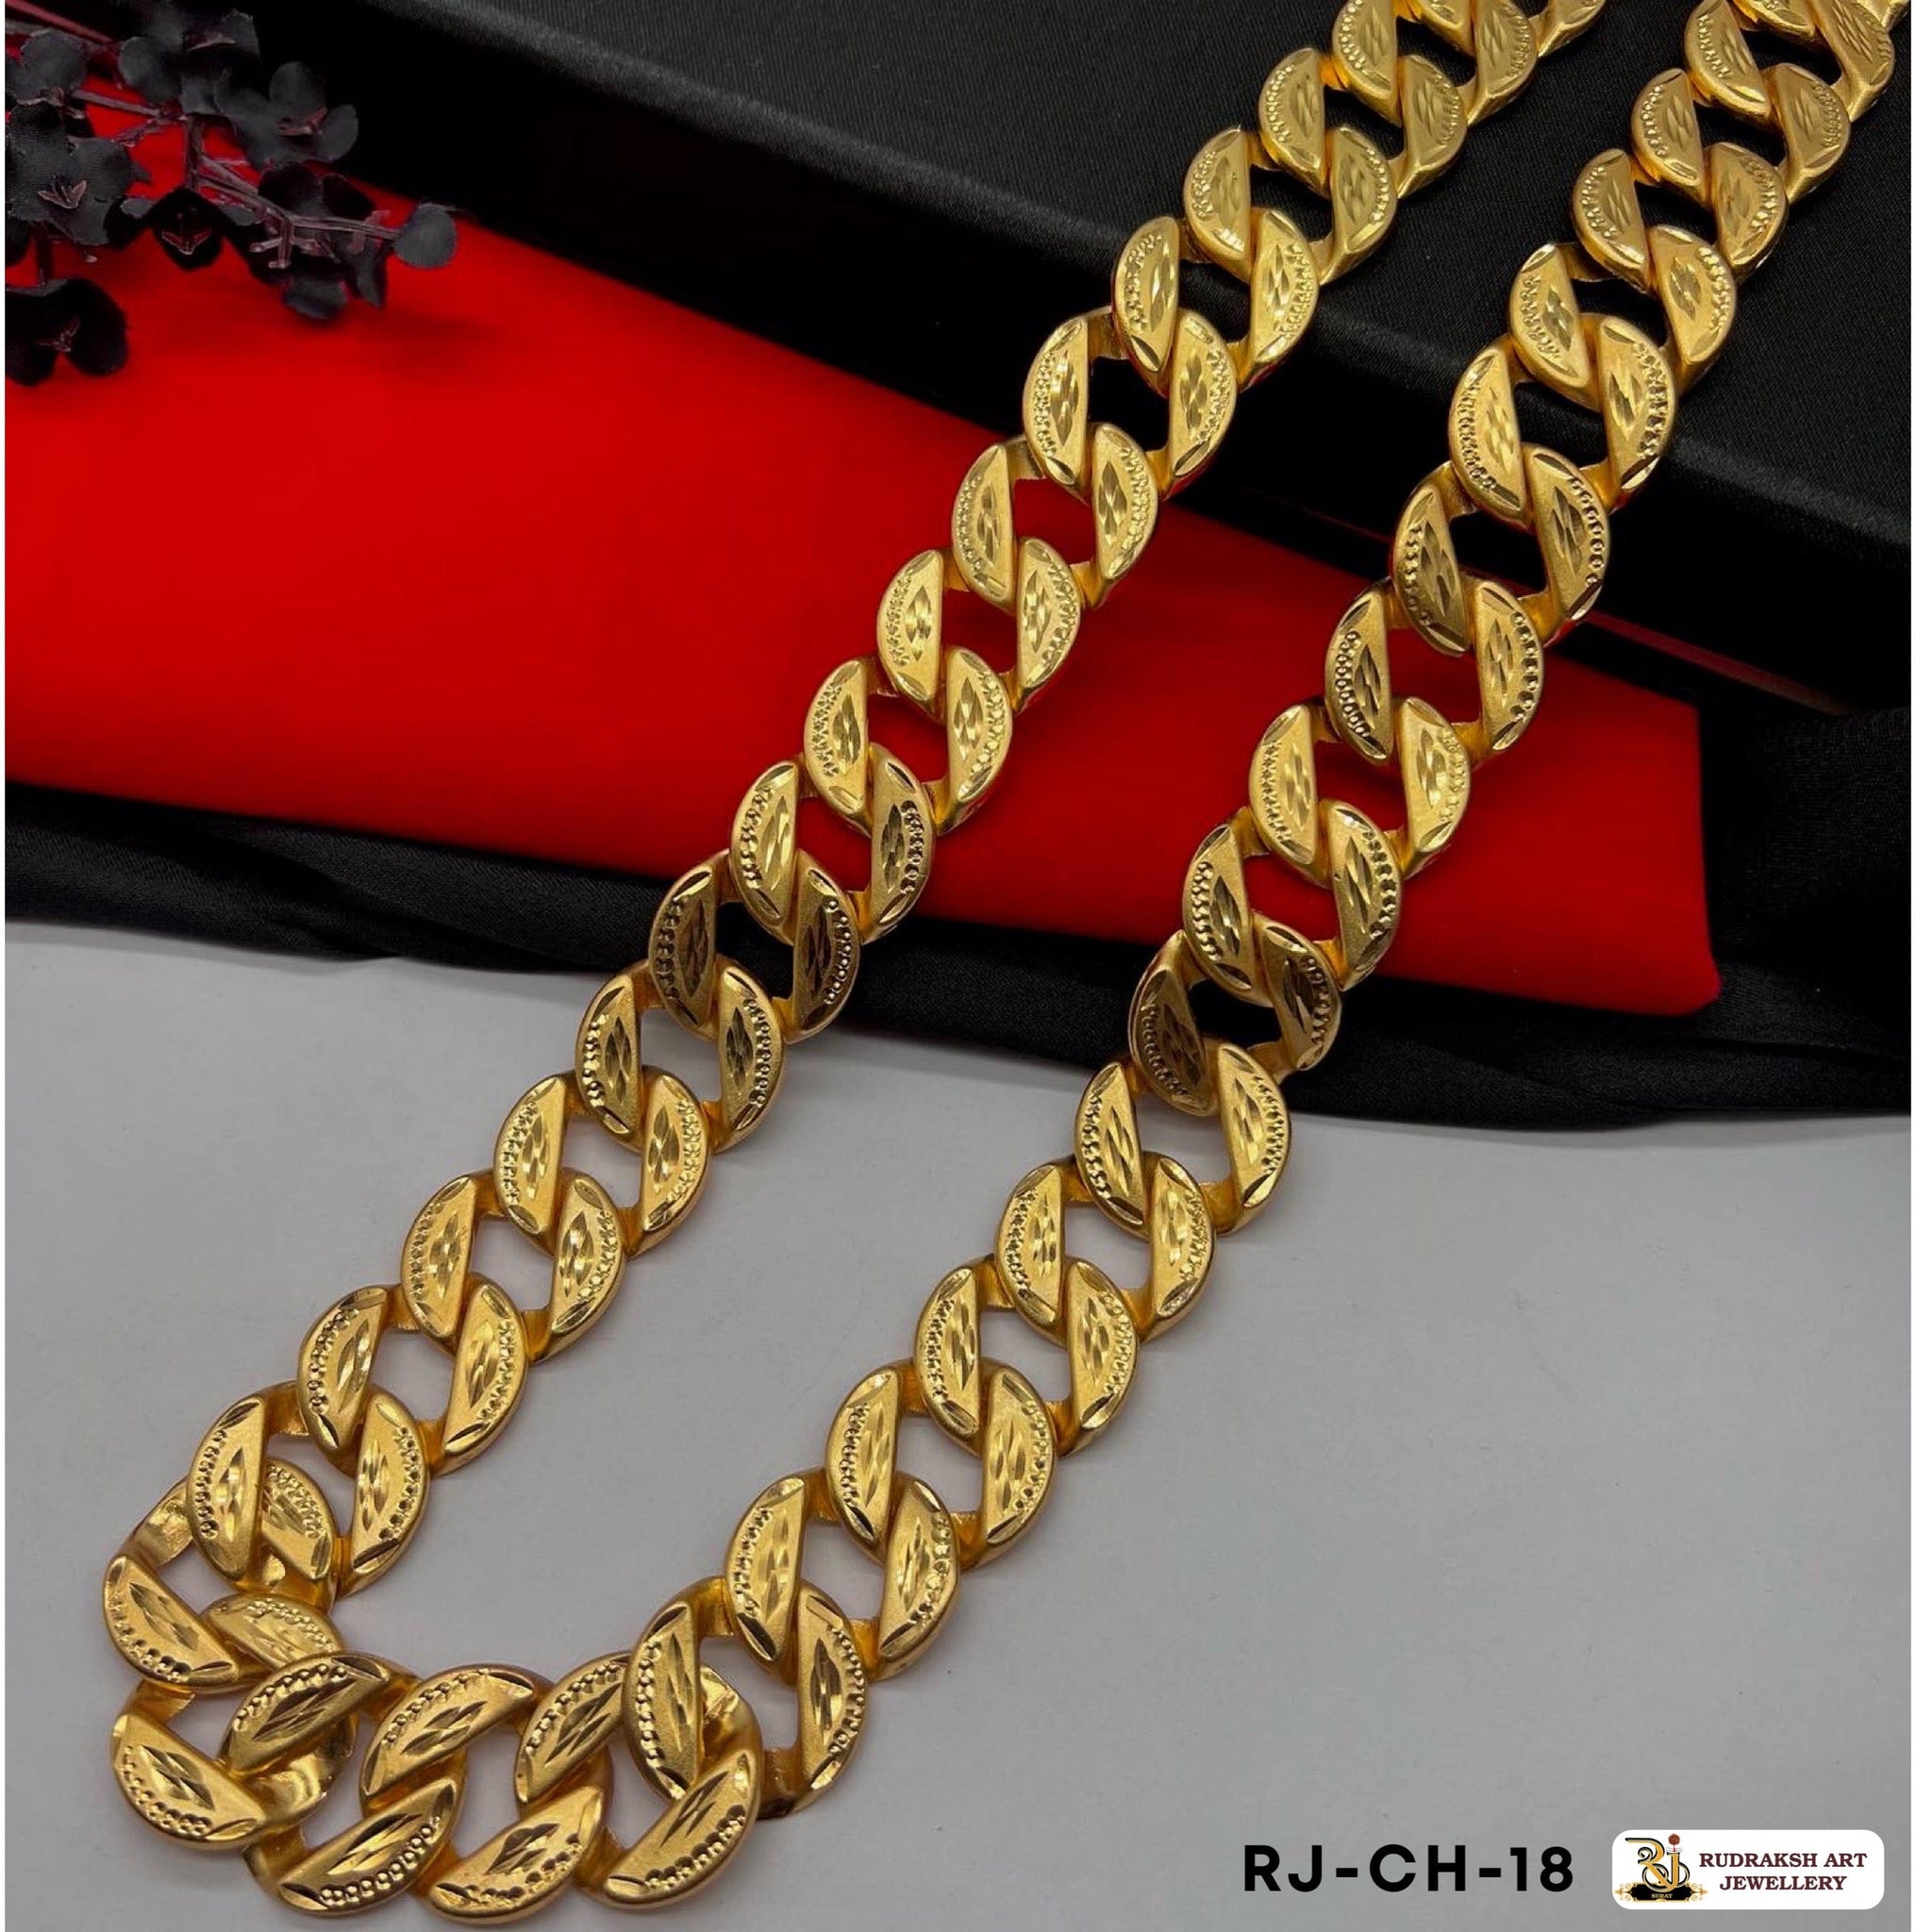 Superior design of Big size Pokal Chain for Men Rudraksh Art Jewellery